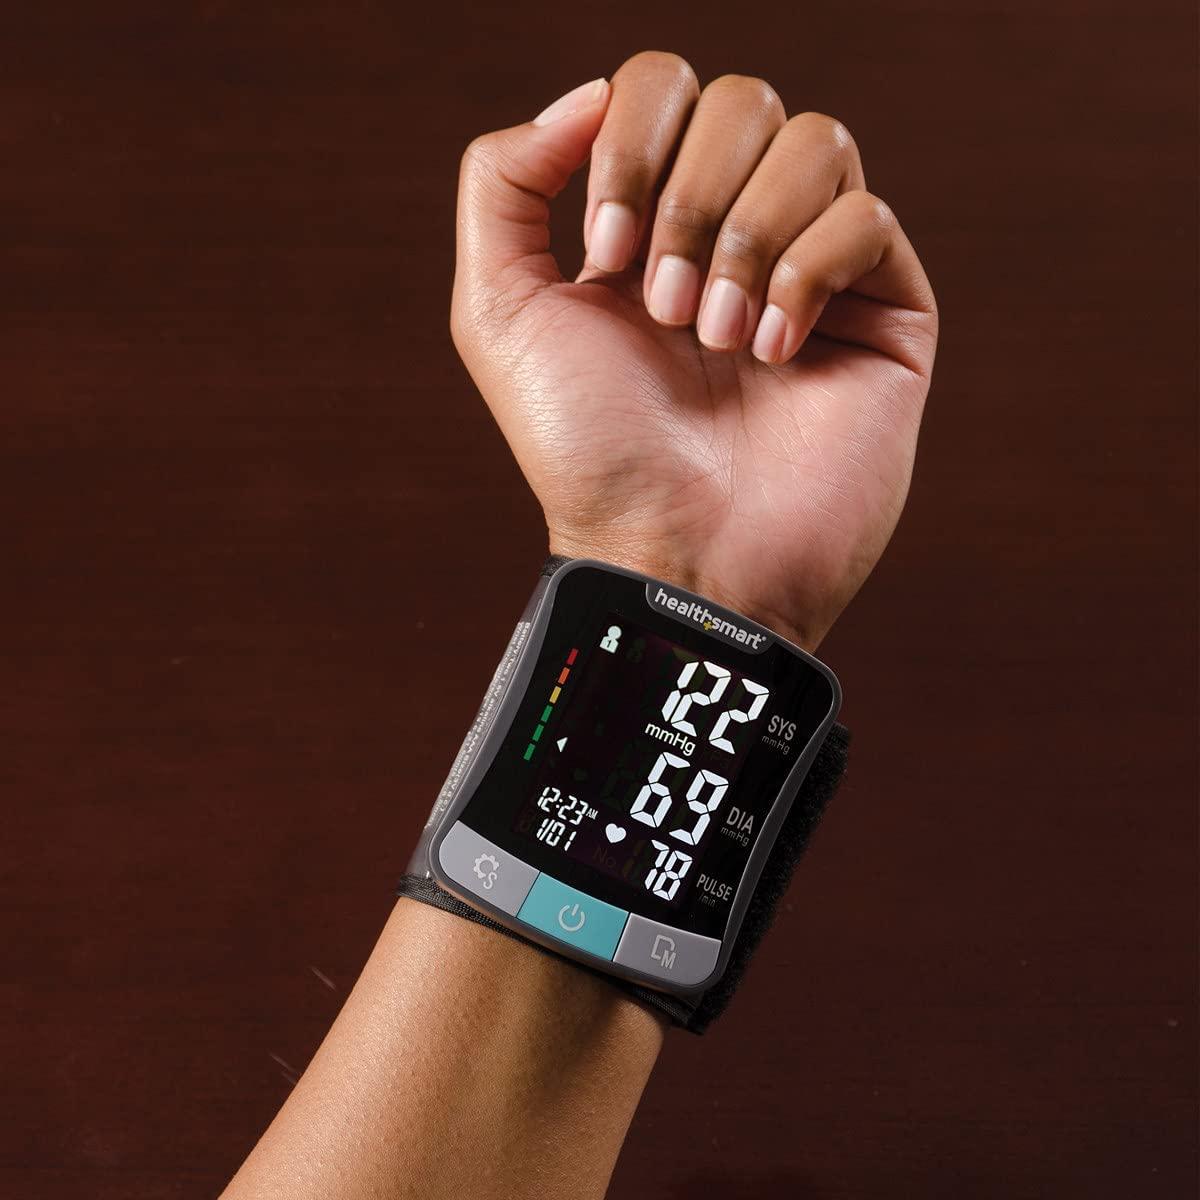 HealthSmart Digital Elite Wrist Blood Pressure Monitor with